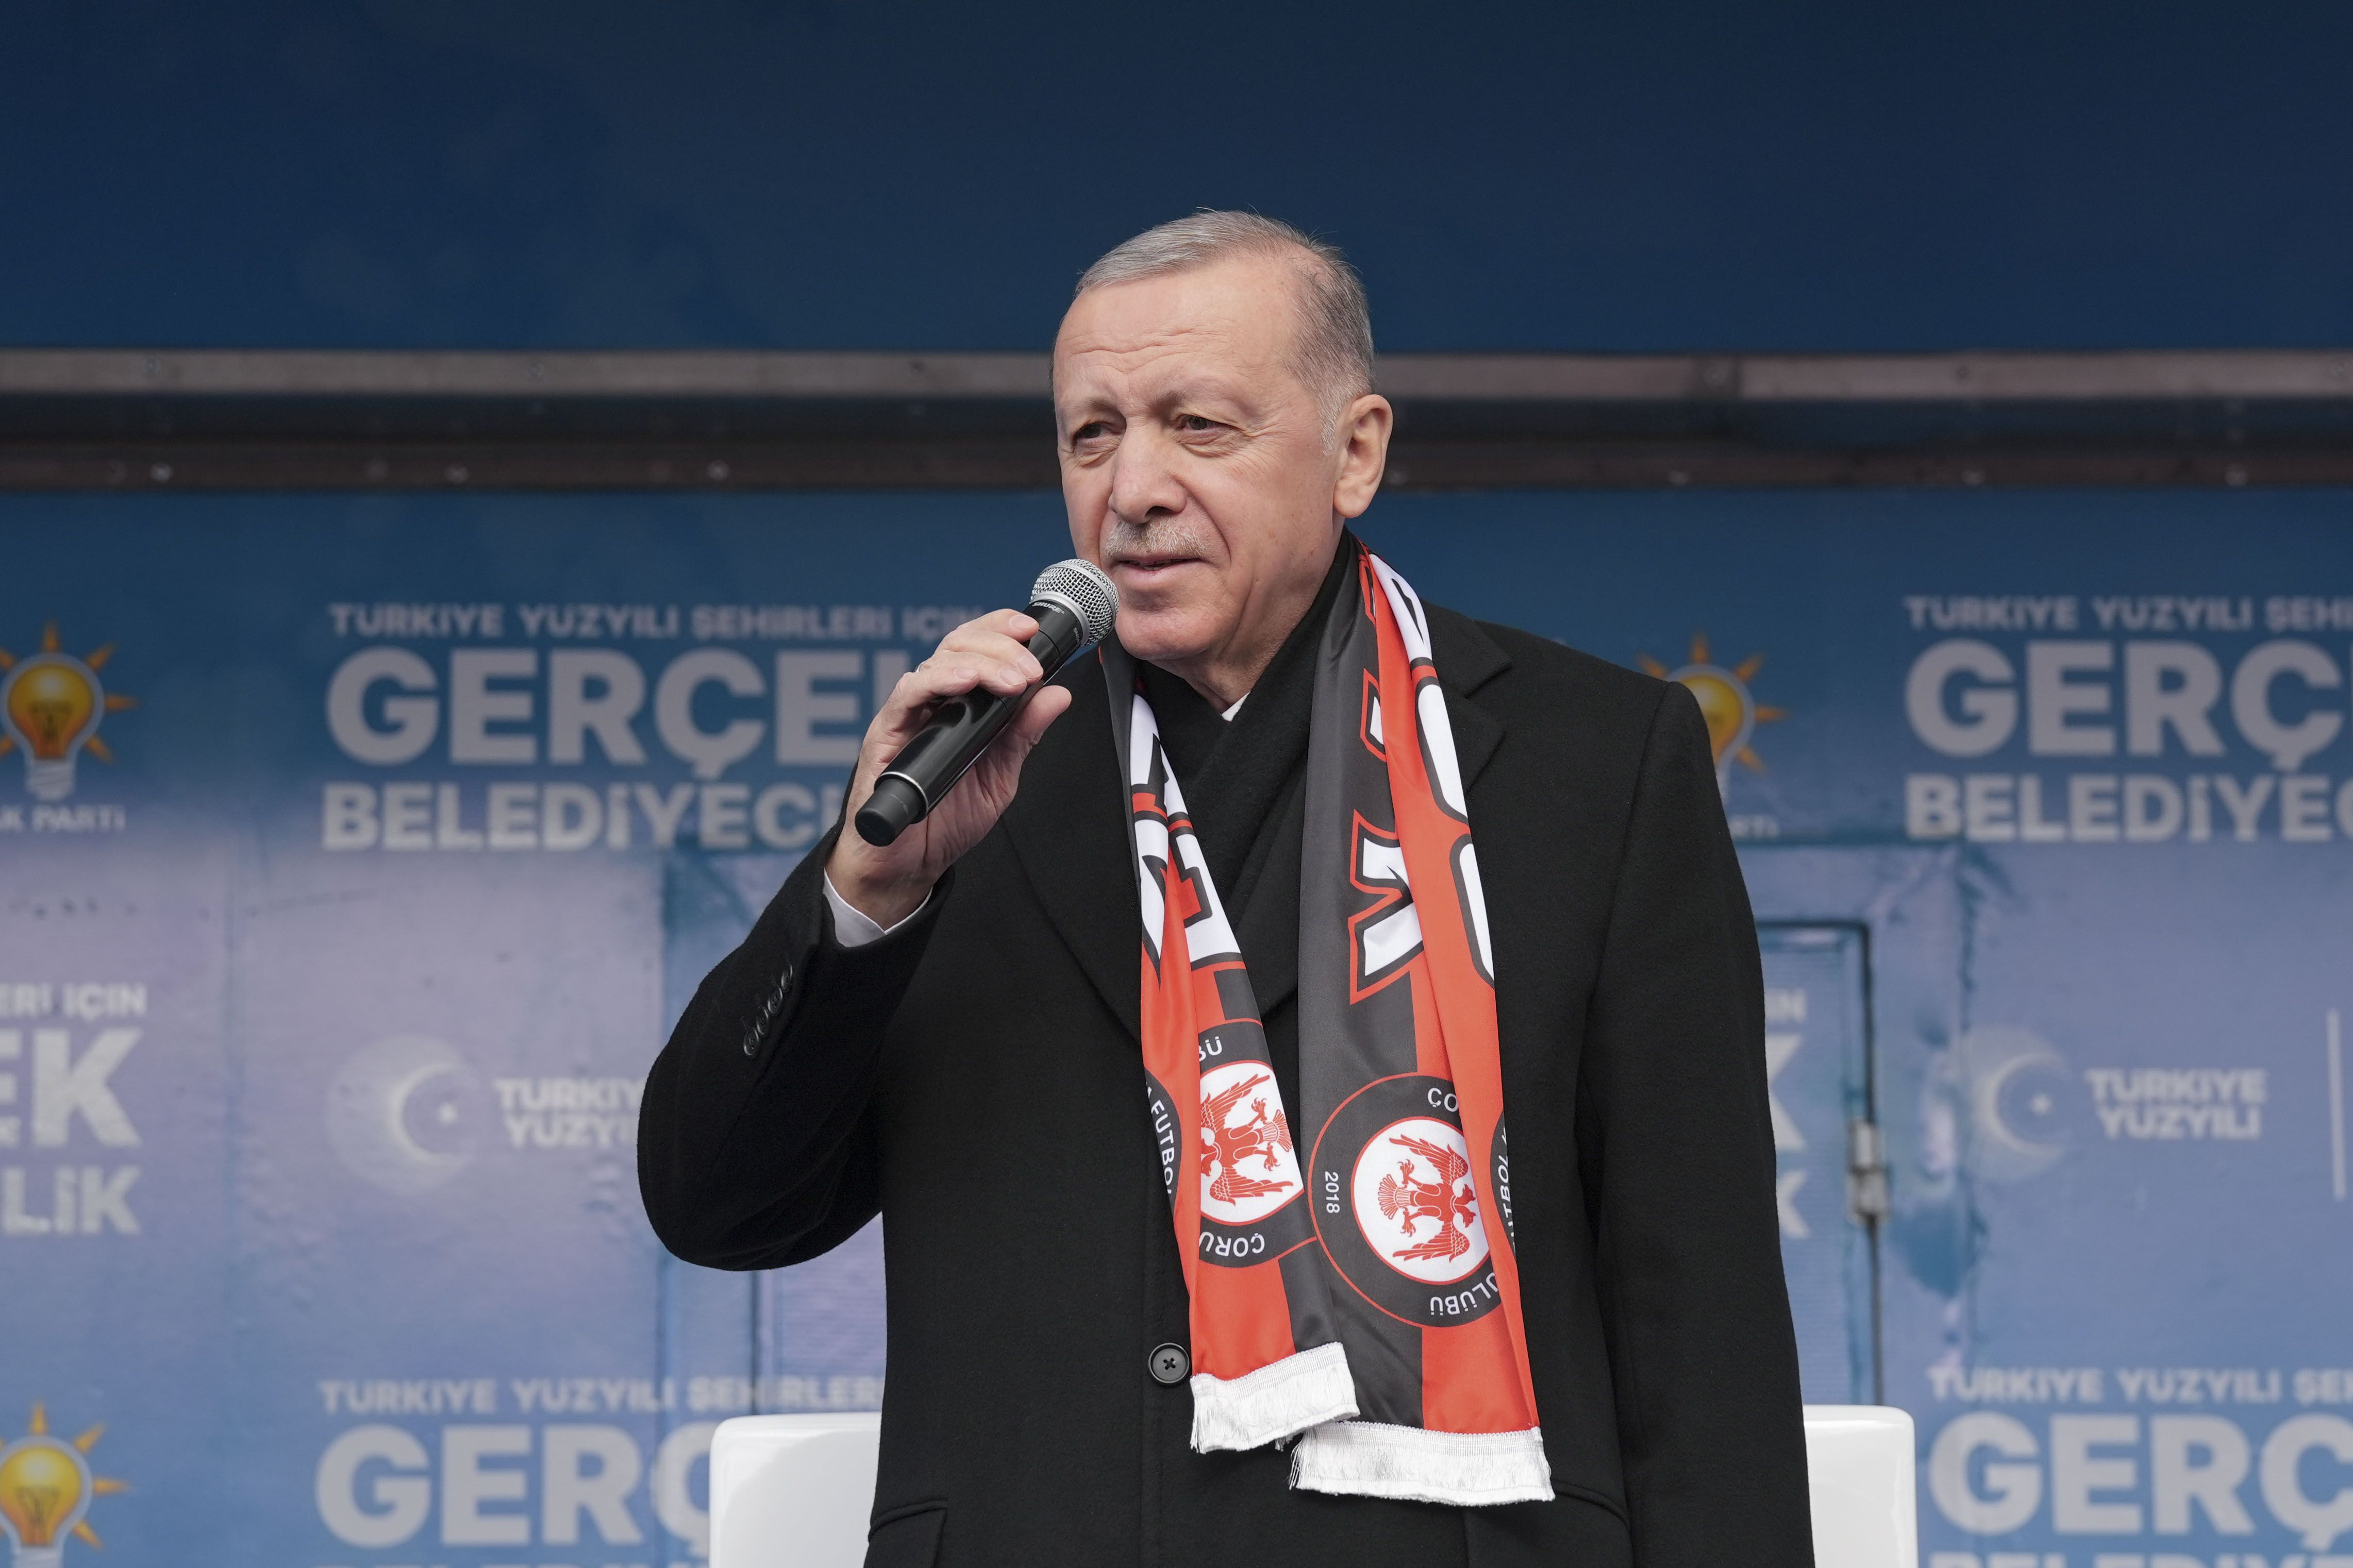 Erdogan highlights government achievements, criticizes opposition at Corum rally